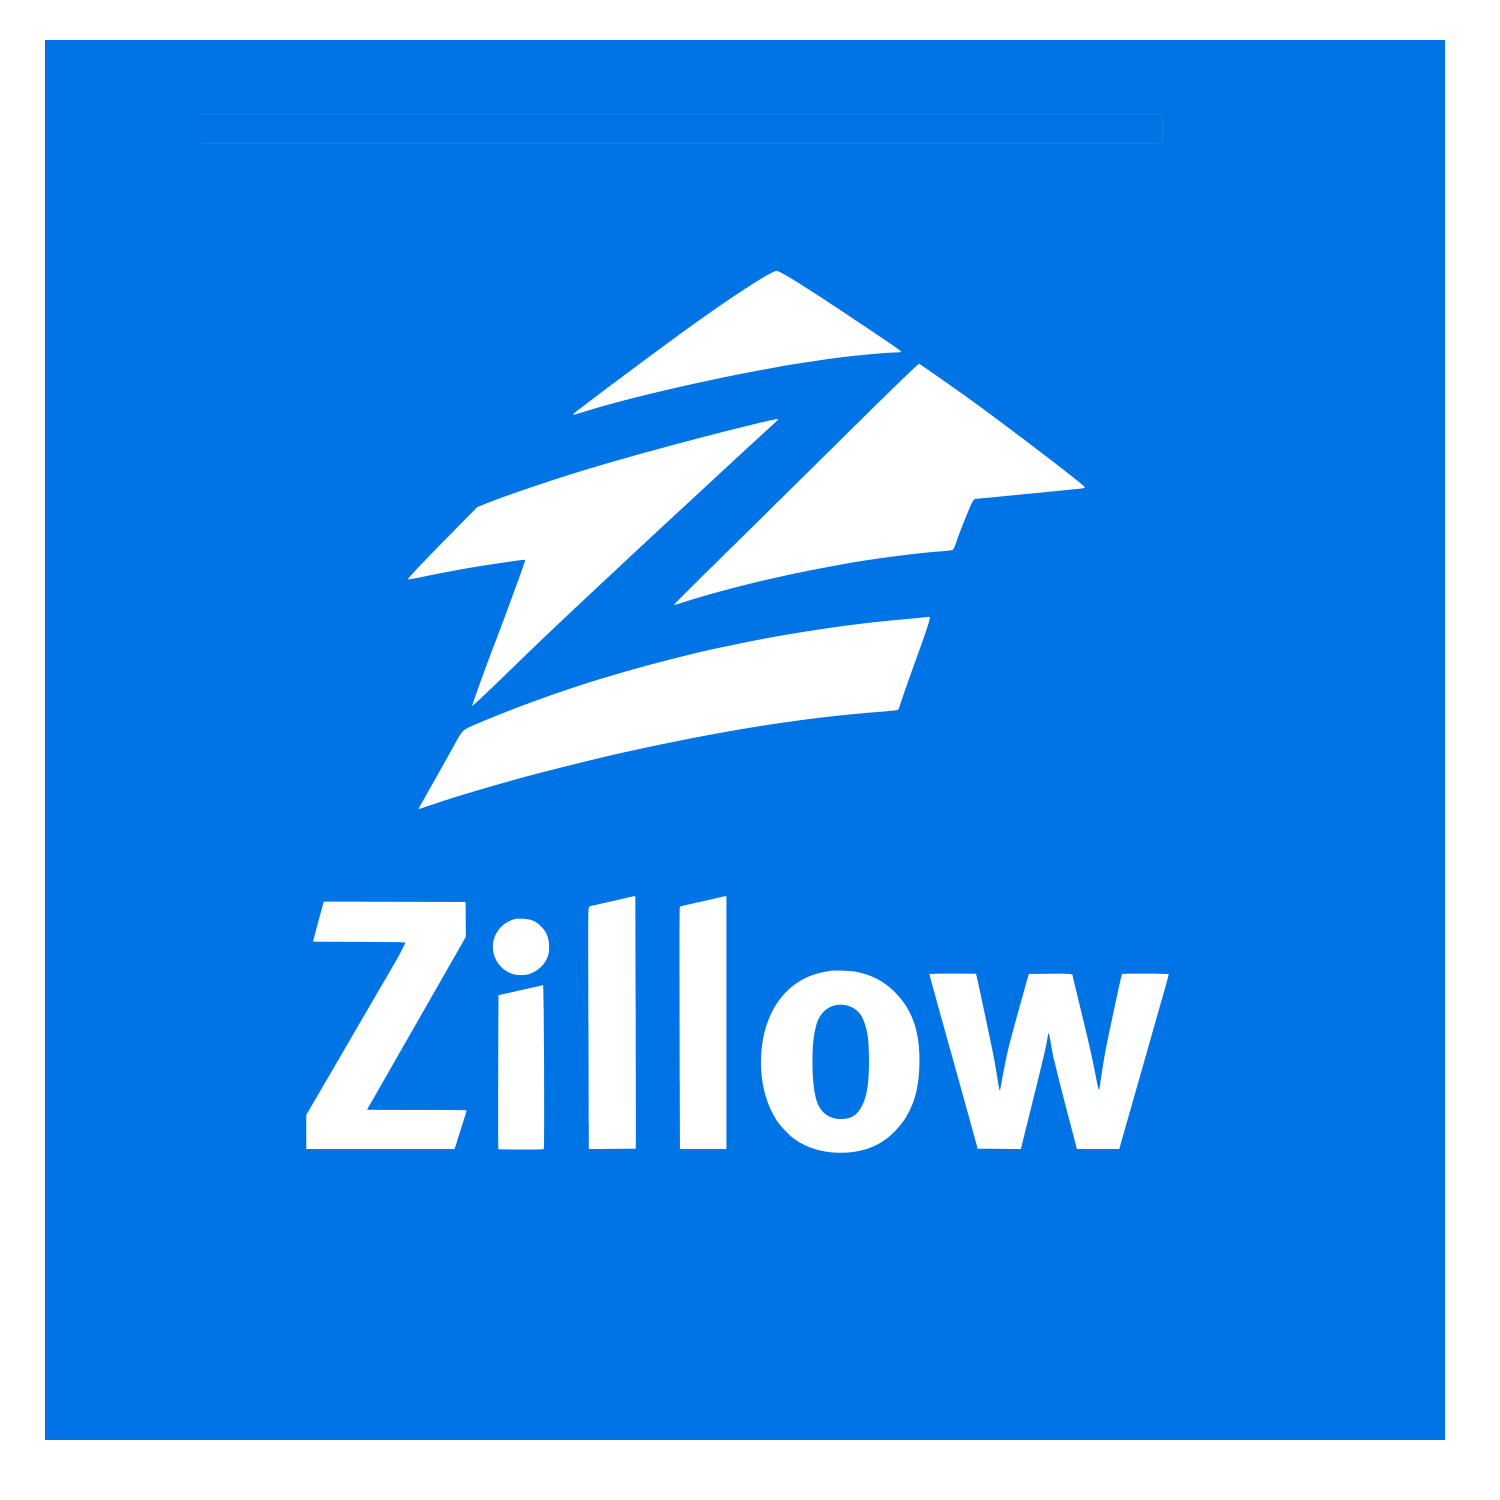 Zillow logo